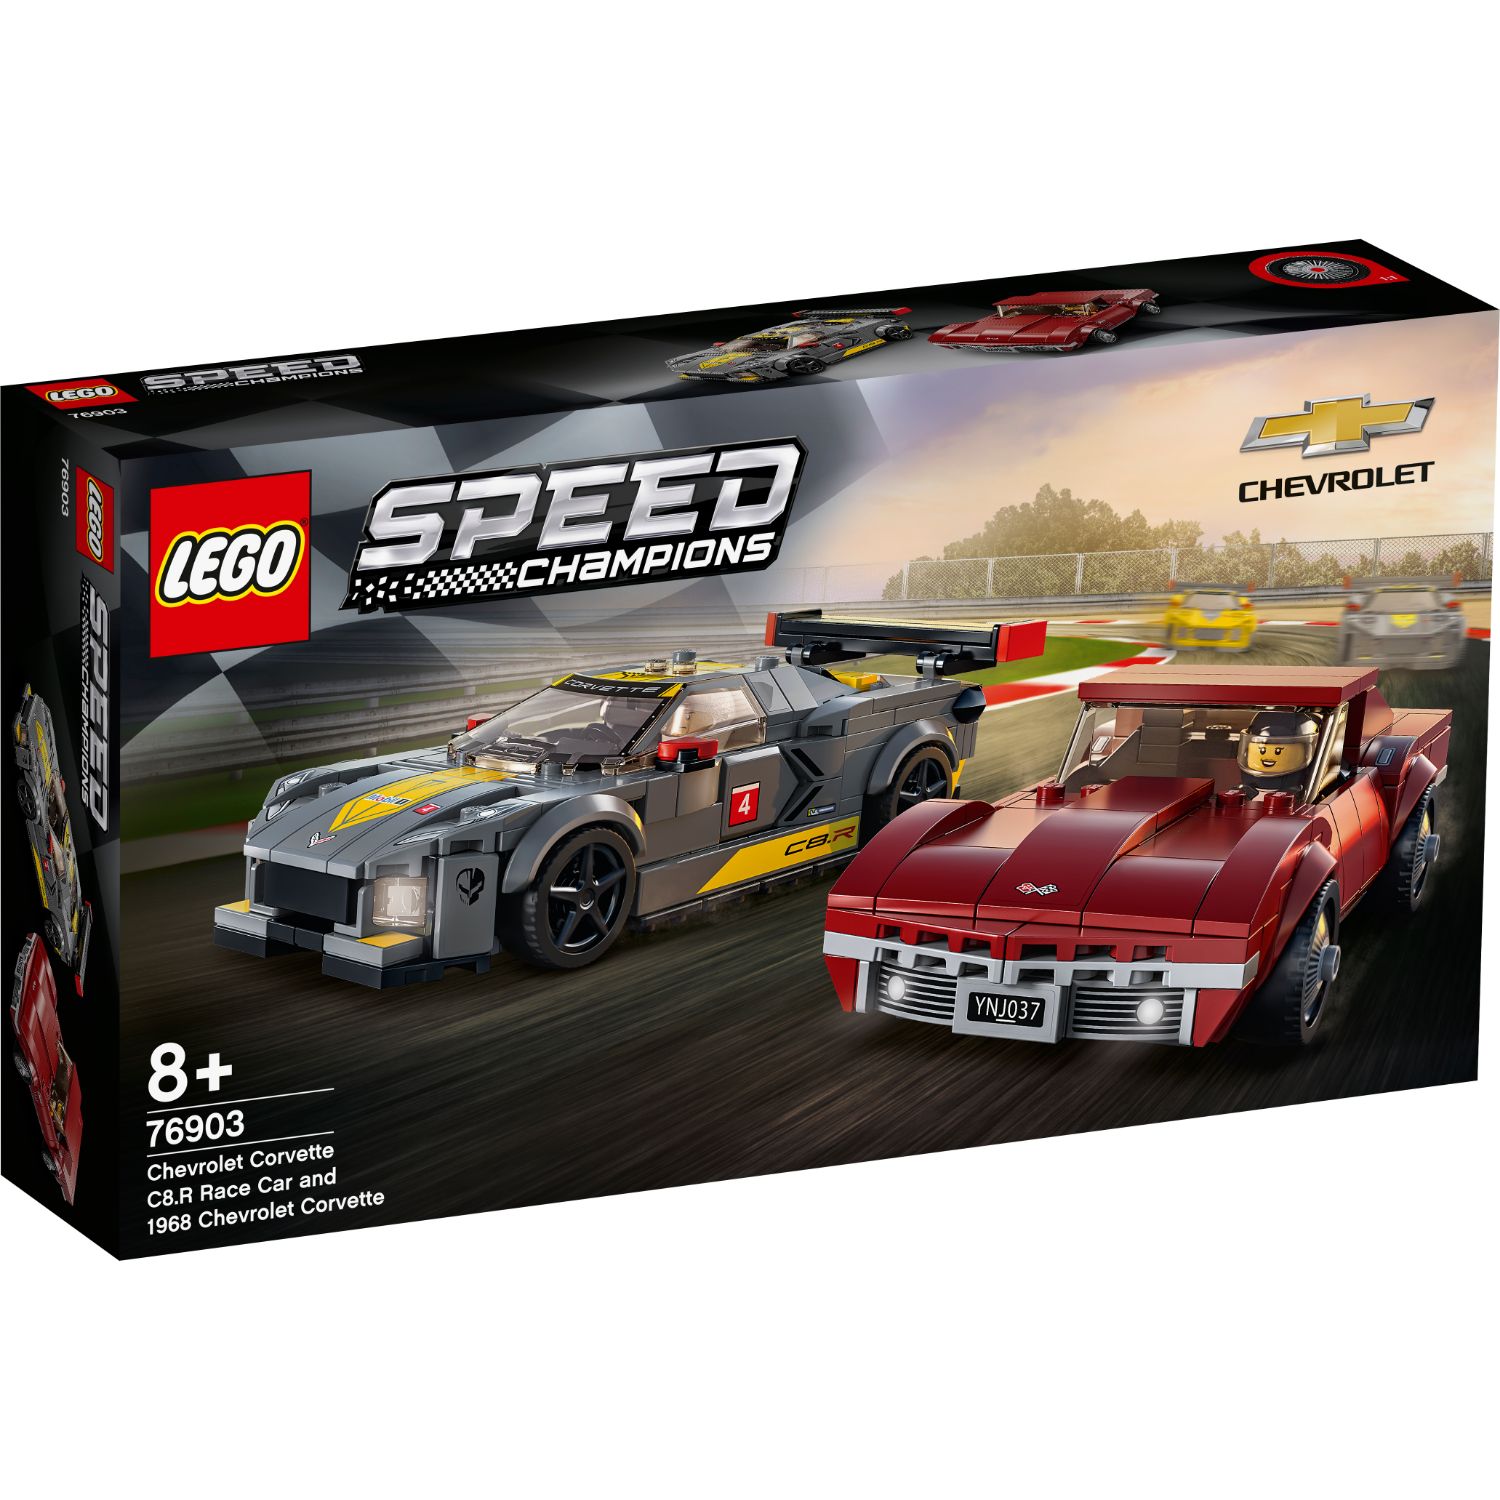 LEGO SPEED CHAMPION 76903 CHEVROLET CORVETTE